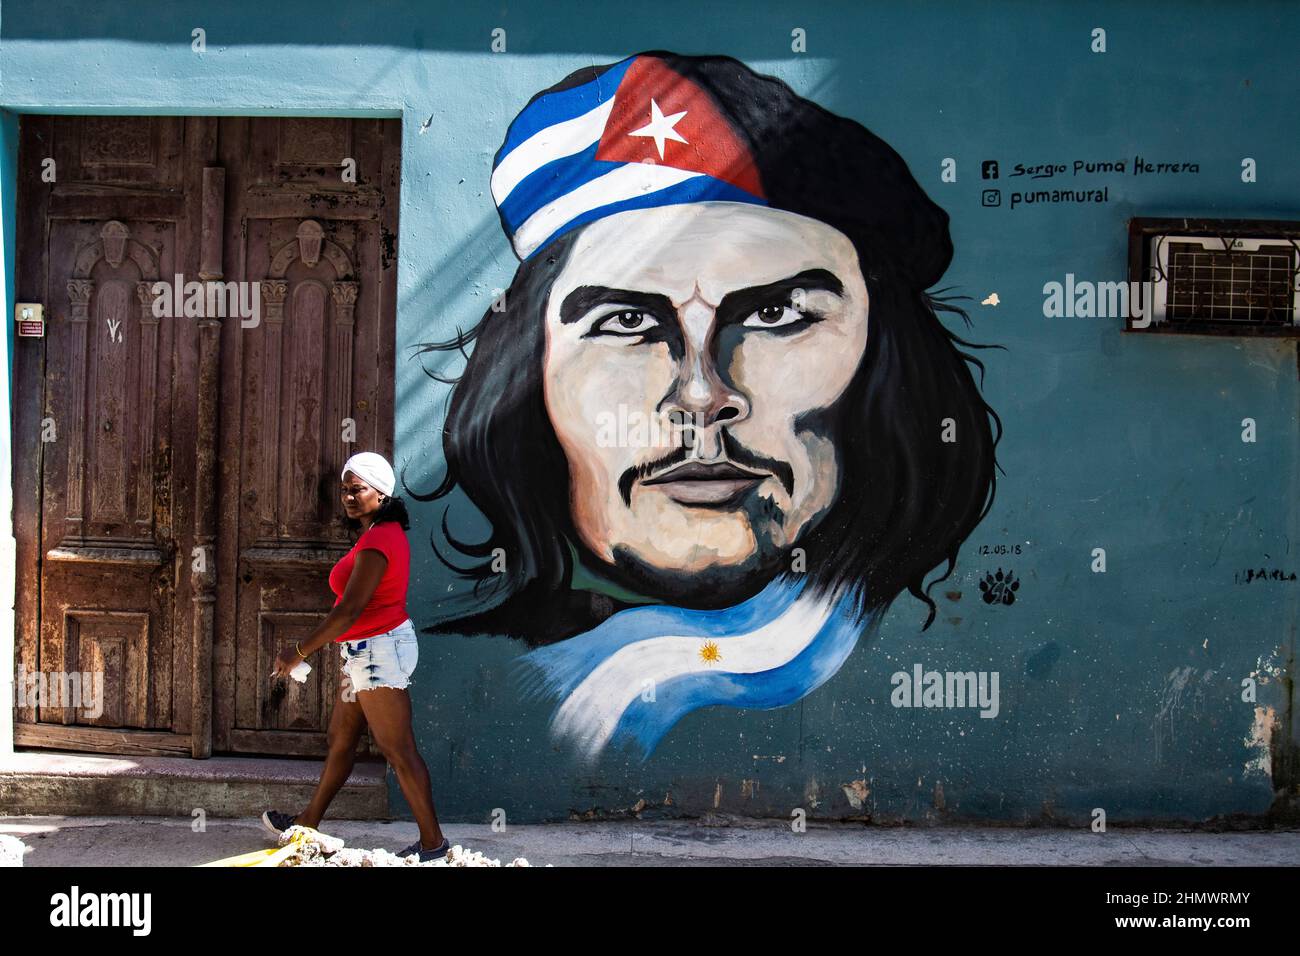 Woman walking the street in Havana, Cuba in front of a graffiti artistic image by artist Pumamural of legendary revolutionary hero Che Guevara. Stock Photo